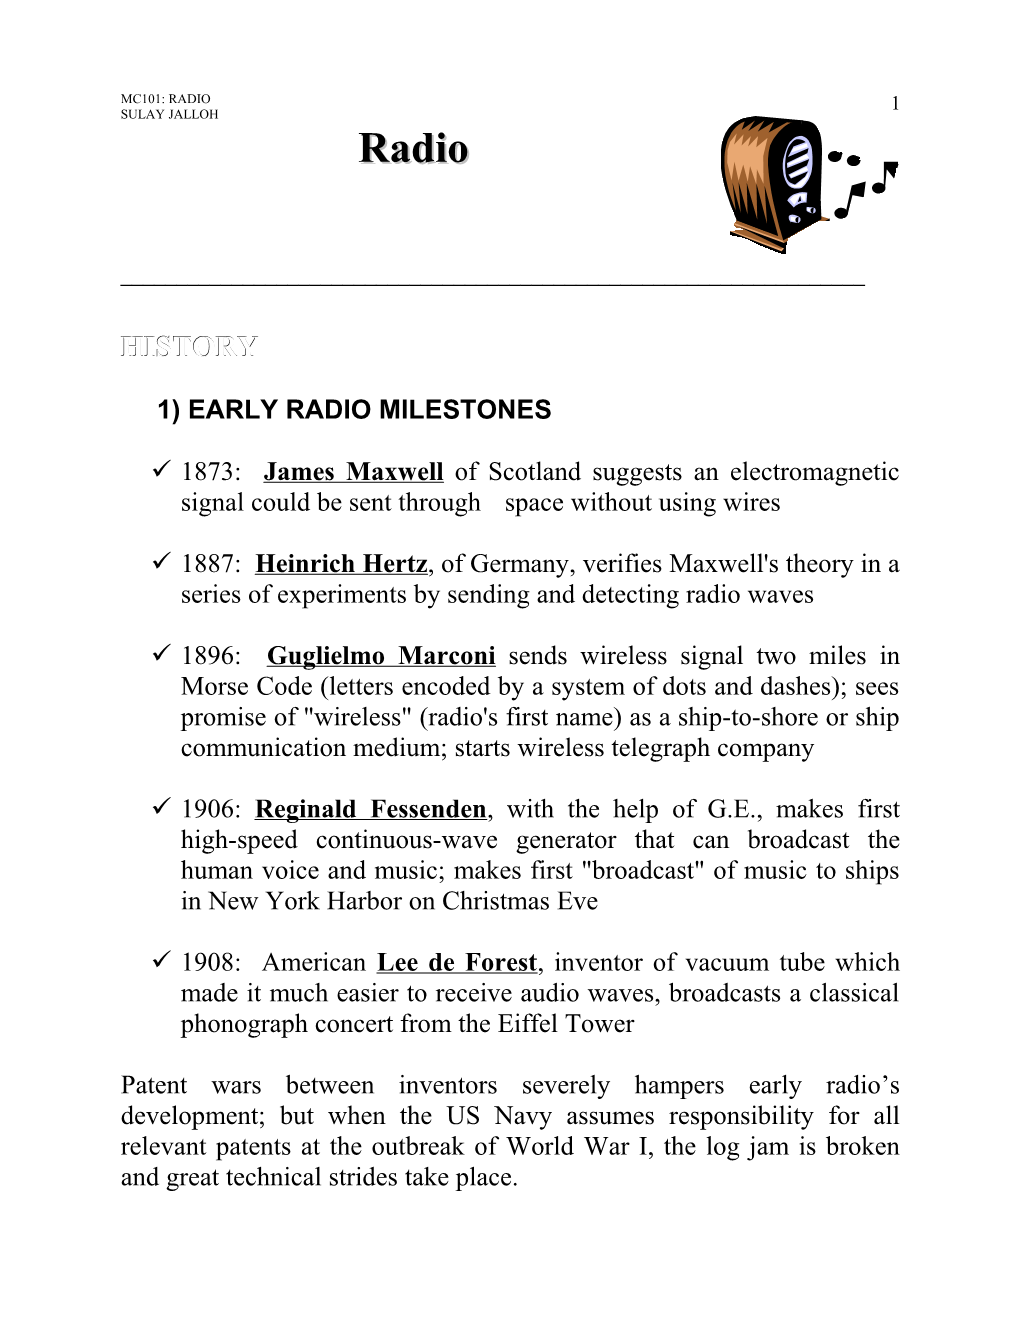 1) Early Radio Milestones